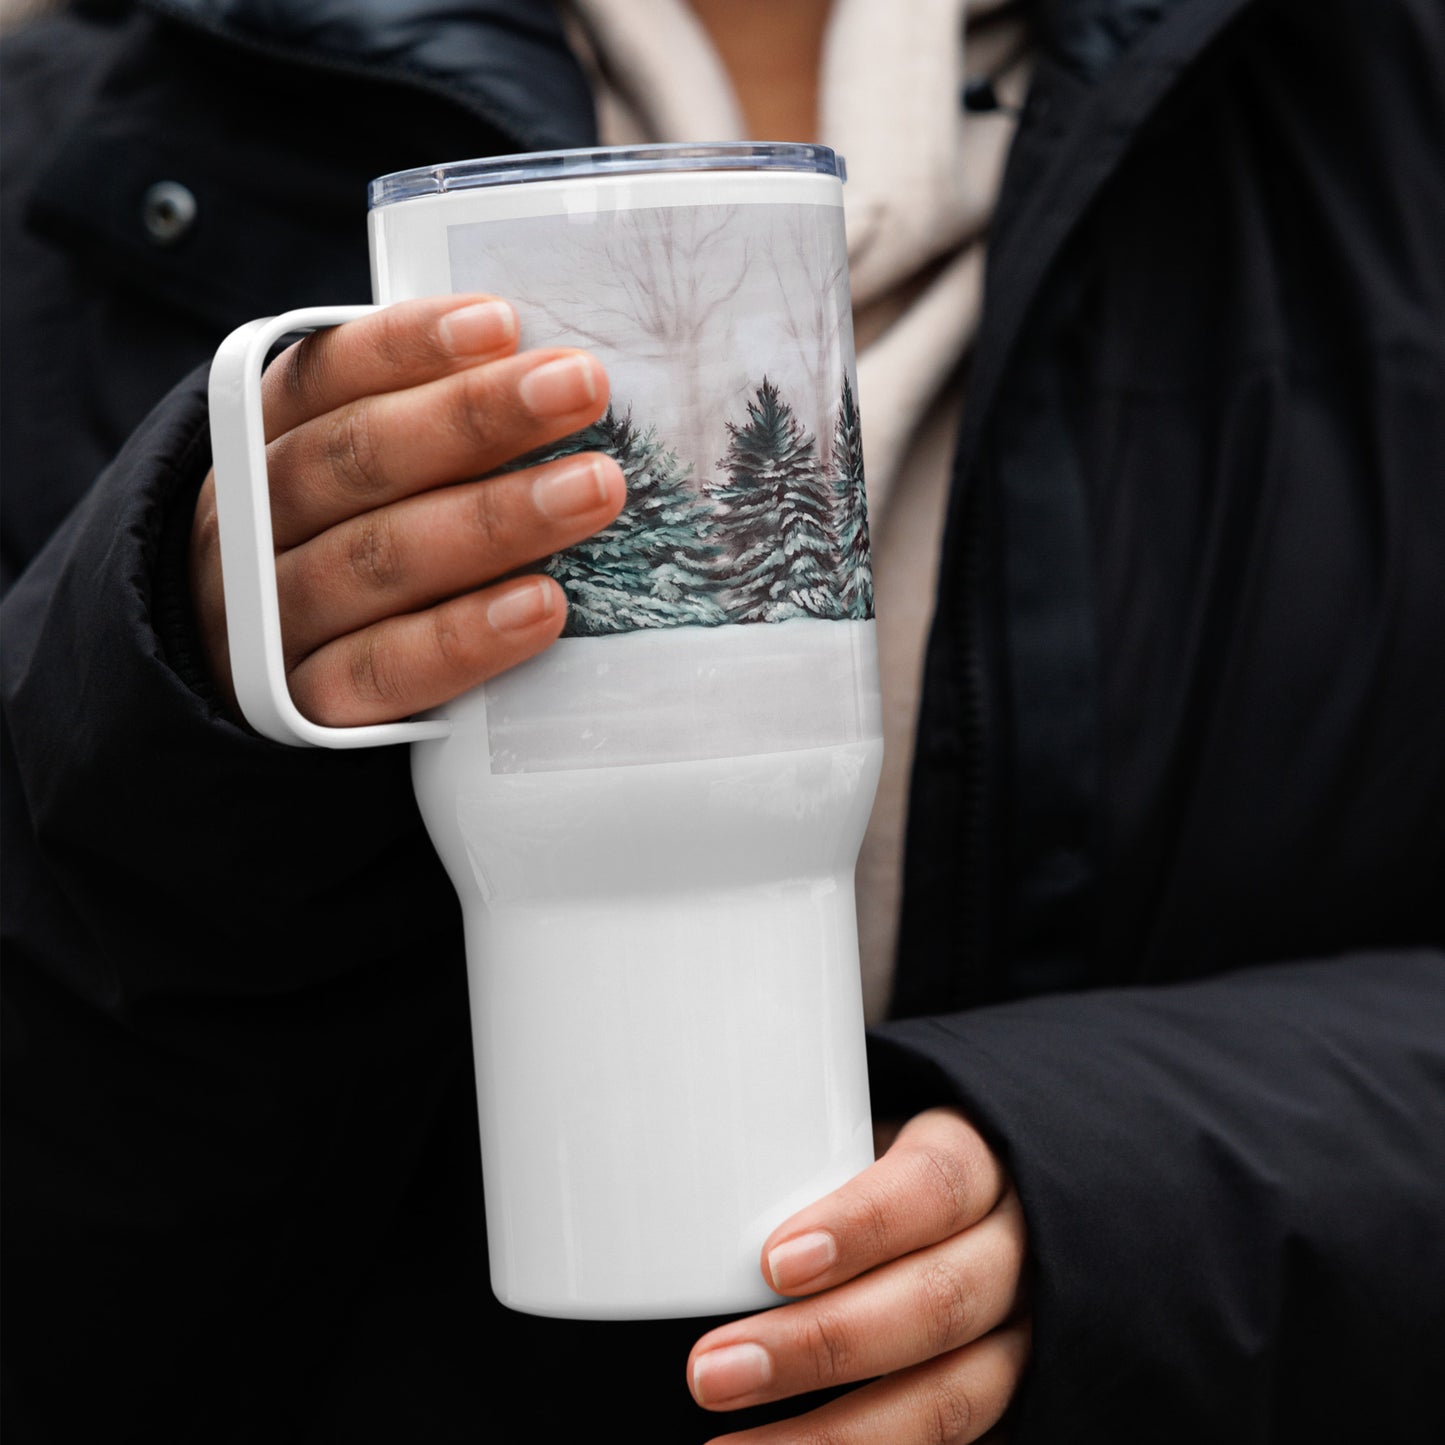 Winter Wonderland Travel mug with a handle